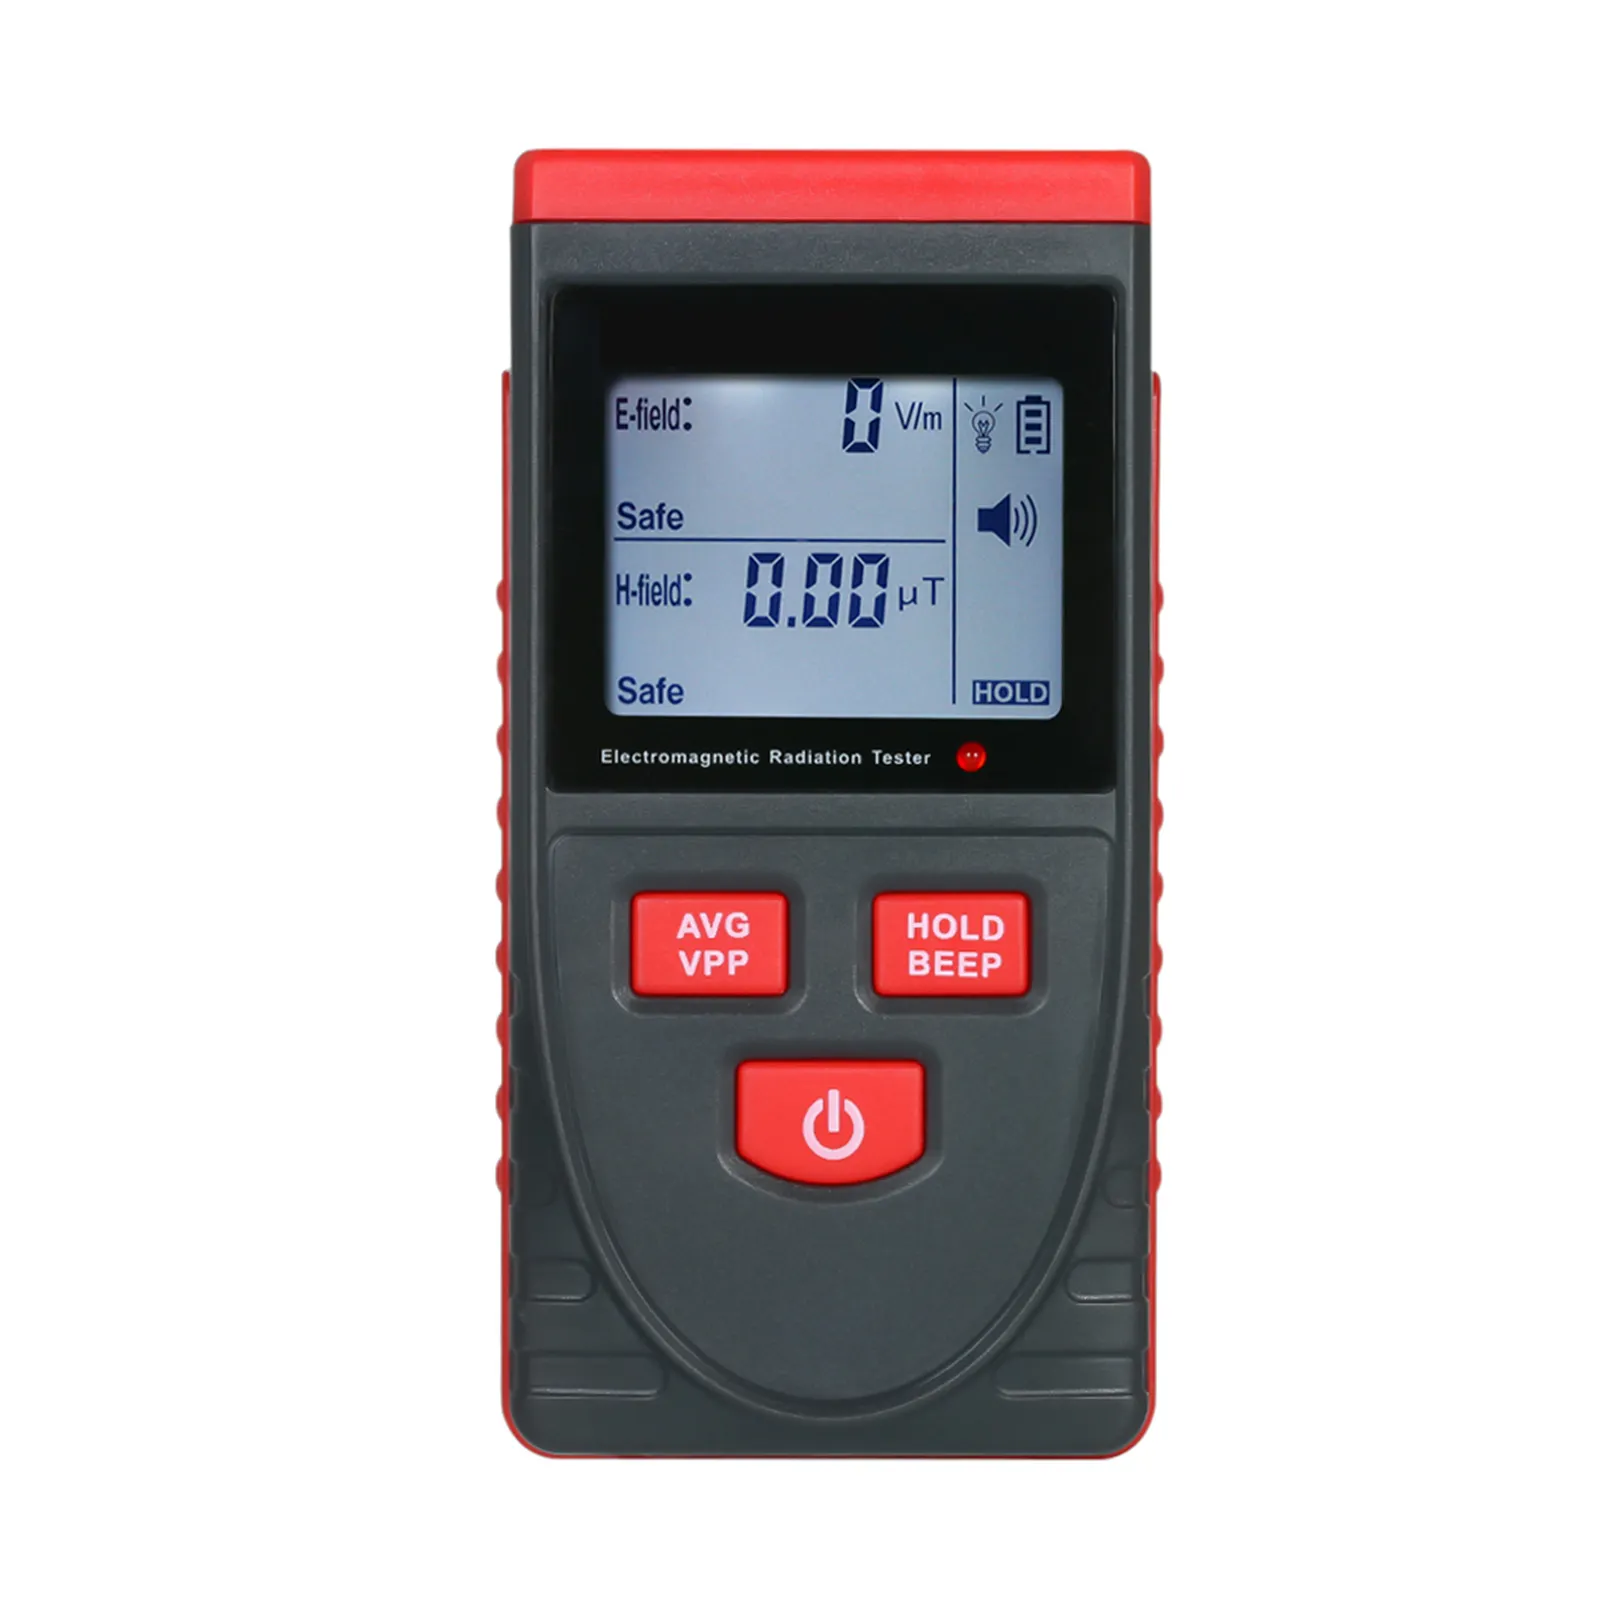 WT3120 Digital LCD Electromagnetic Radiation Detector Meter Dosimeter Tester Counter